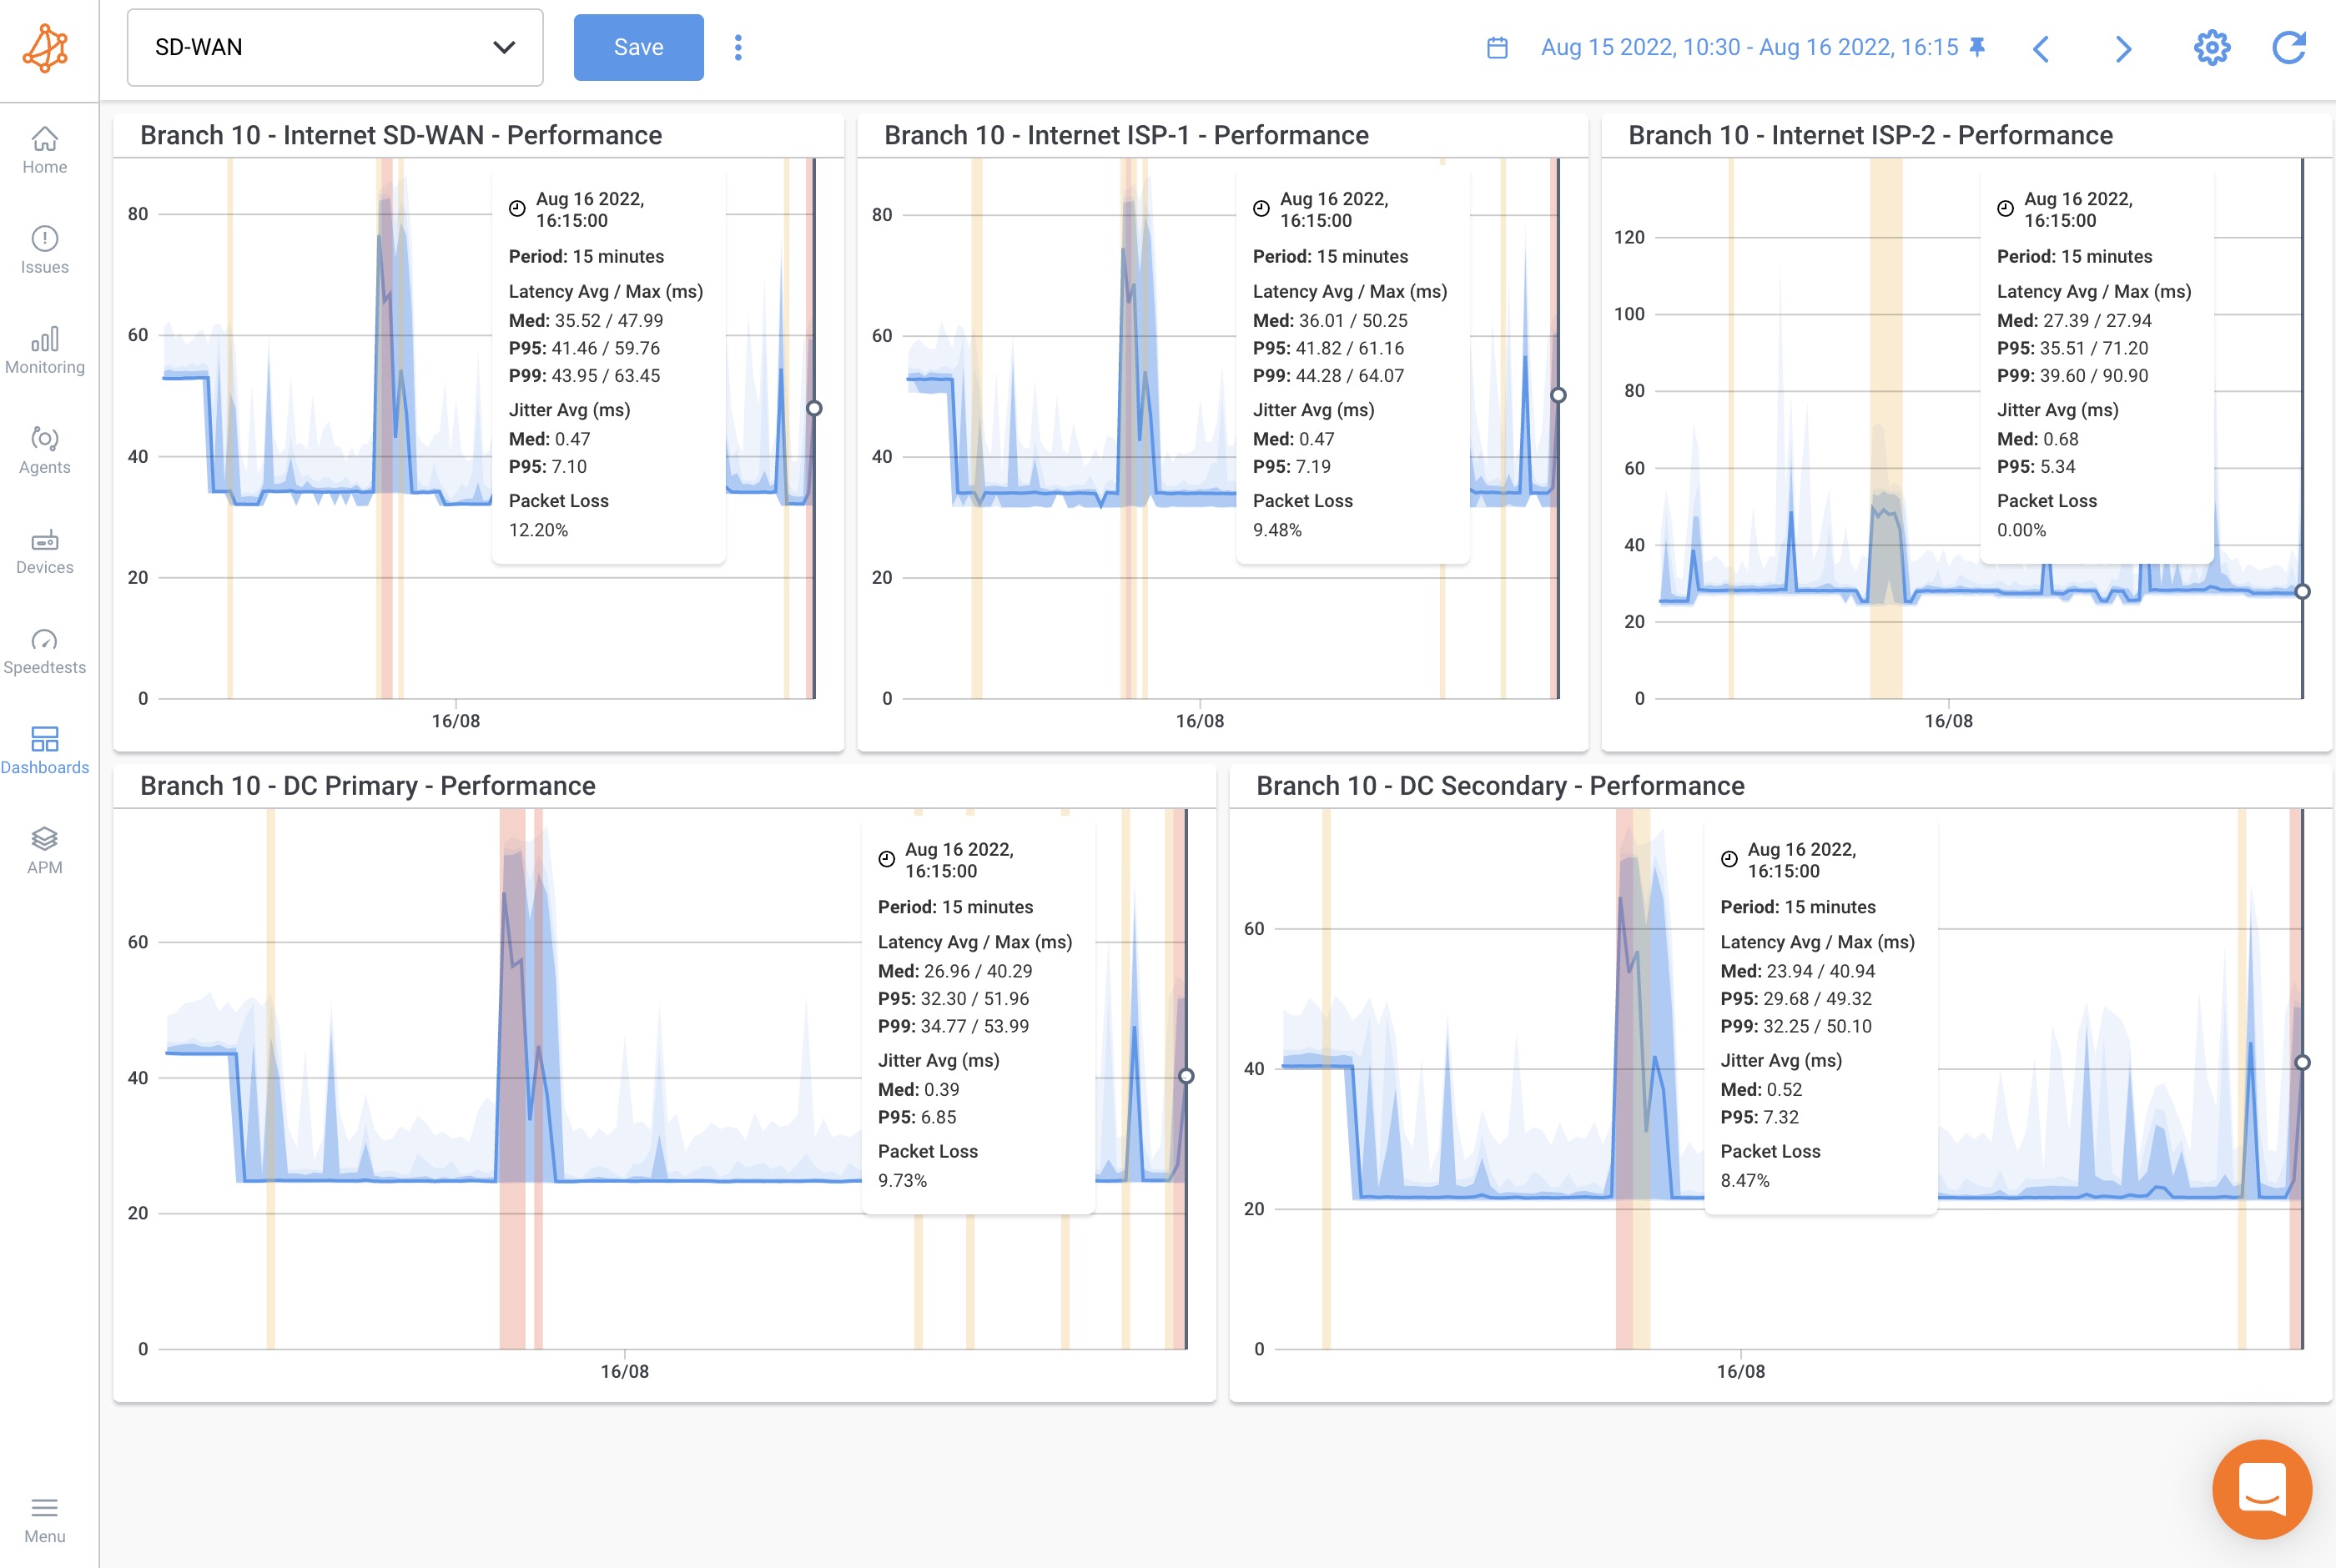 Obkio Network Performance Monitoring - SD-WAN Monitoring Dashboard